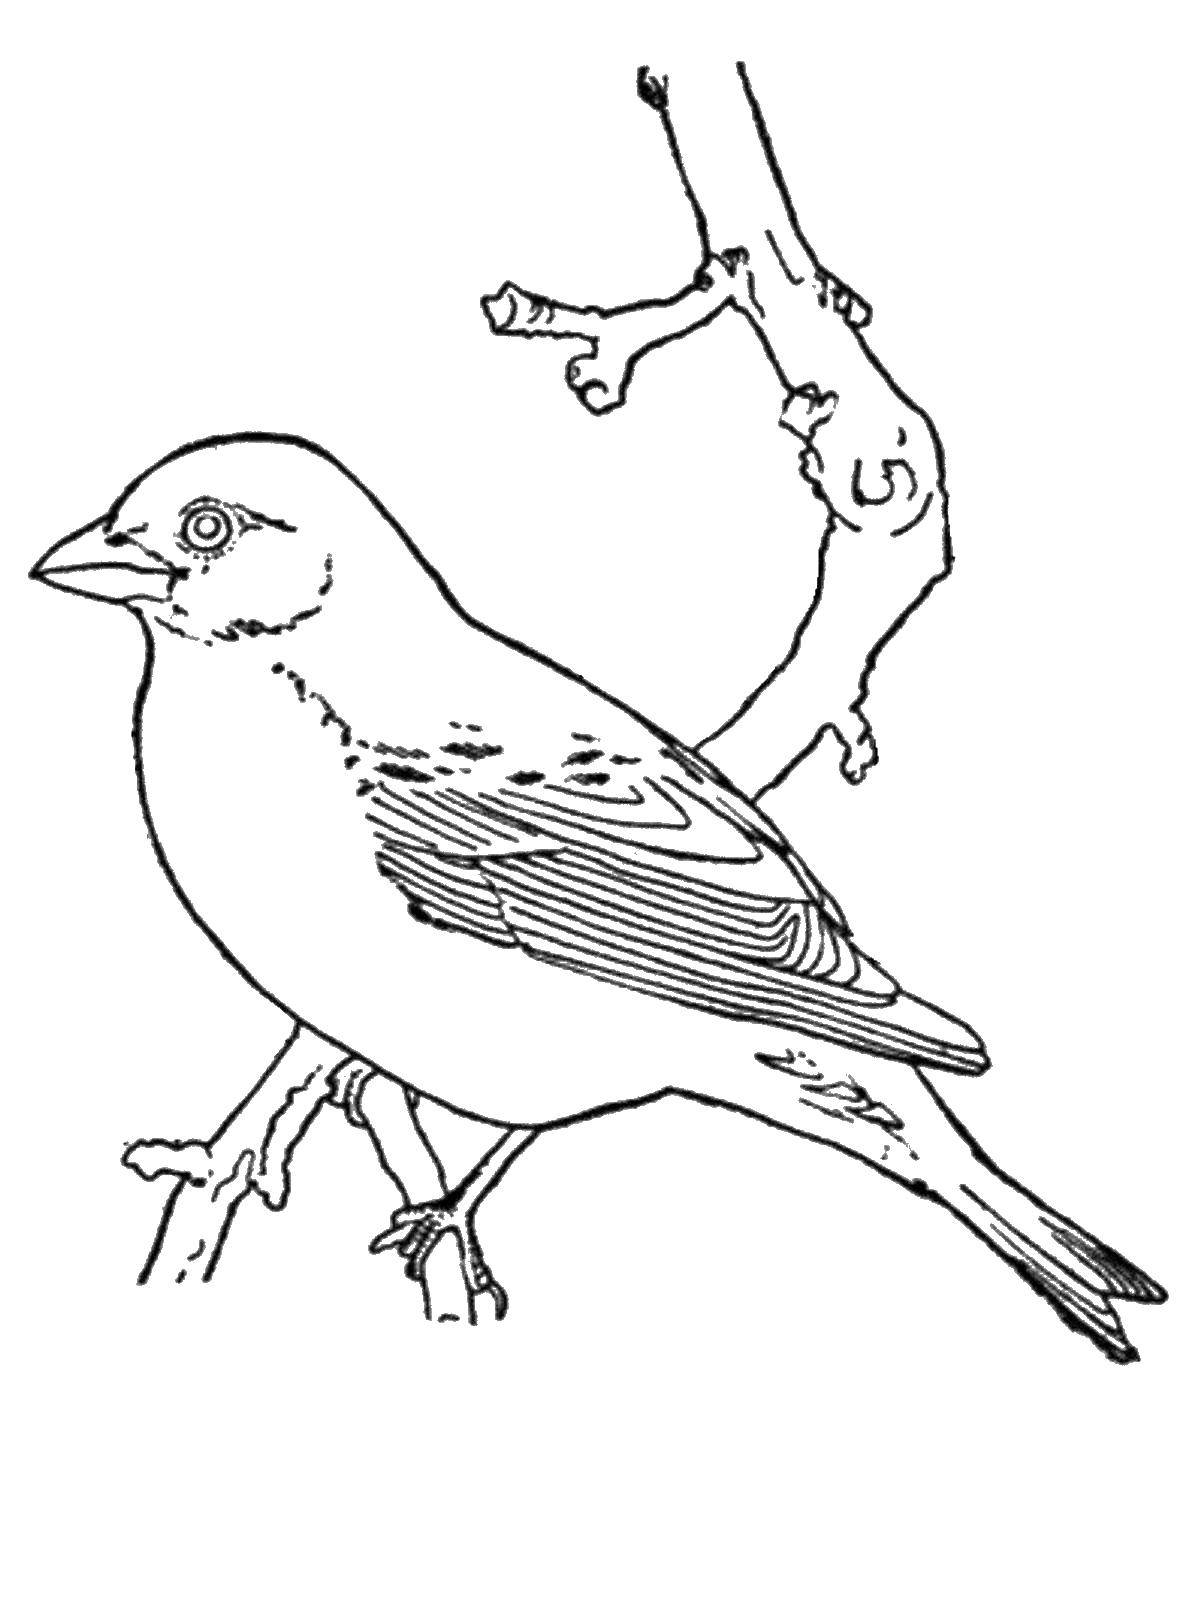 Coloring Bullfinch. Category birds. Tags:  Bullfinch, bird.